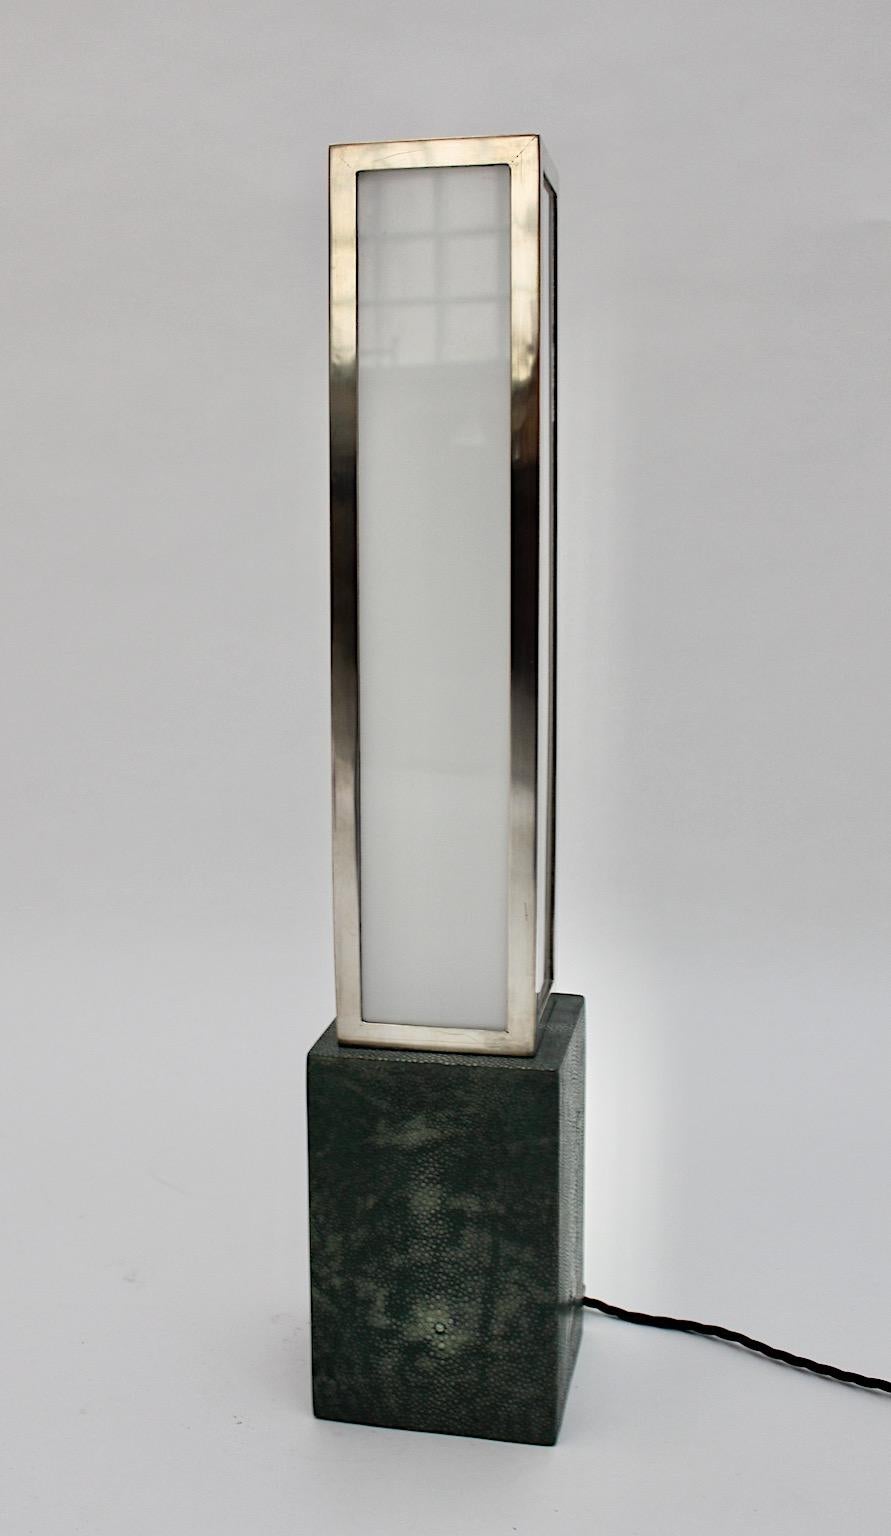 Plexiglass Art Deco Vintage Geometric Table Lamp Style Eckart Muthesius 1920s Germany For Sale